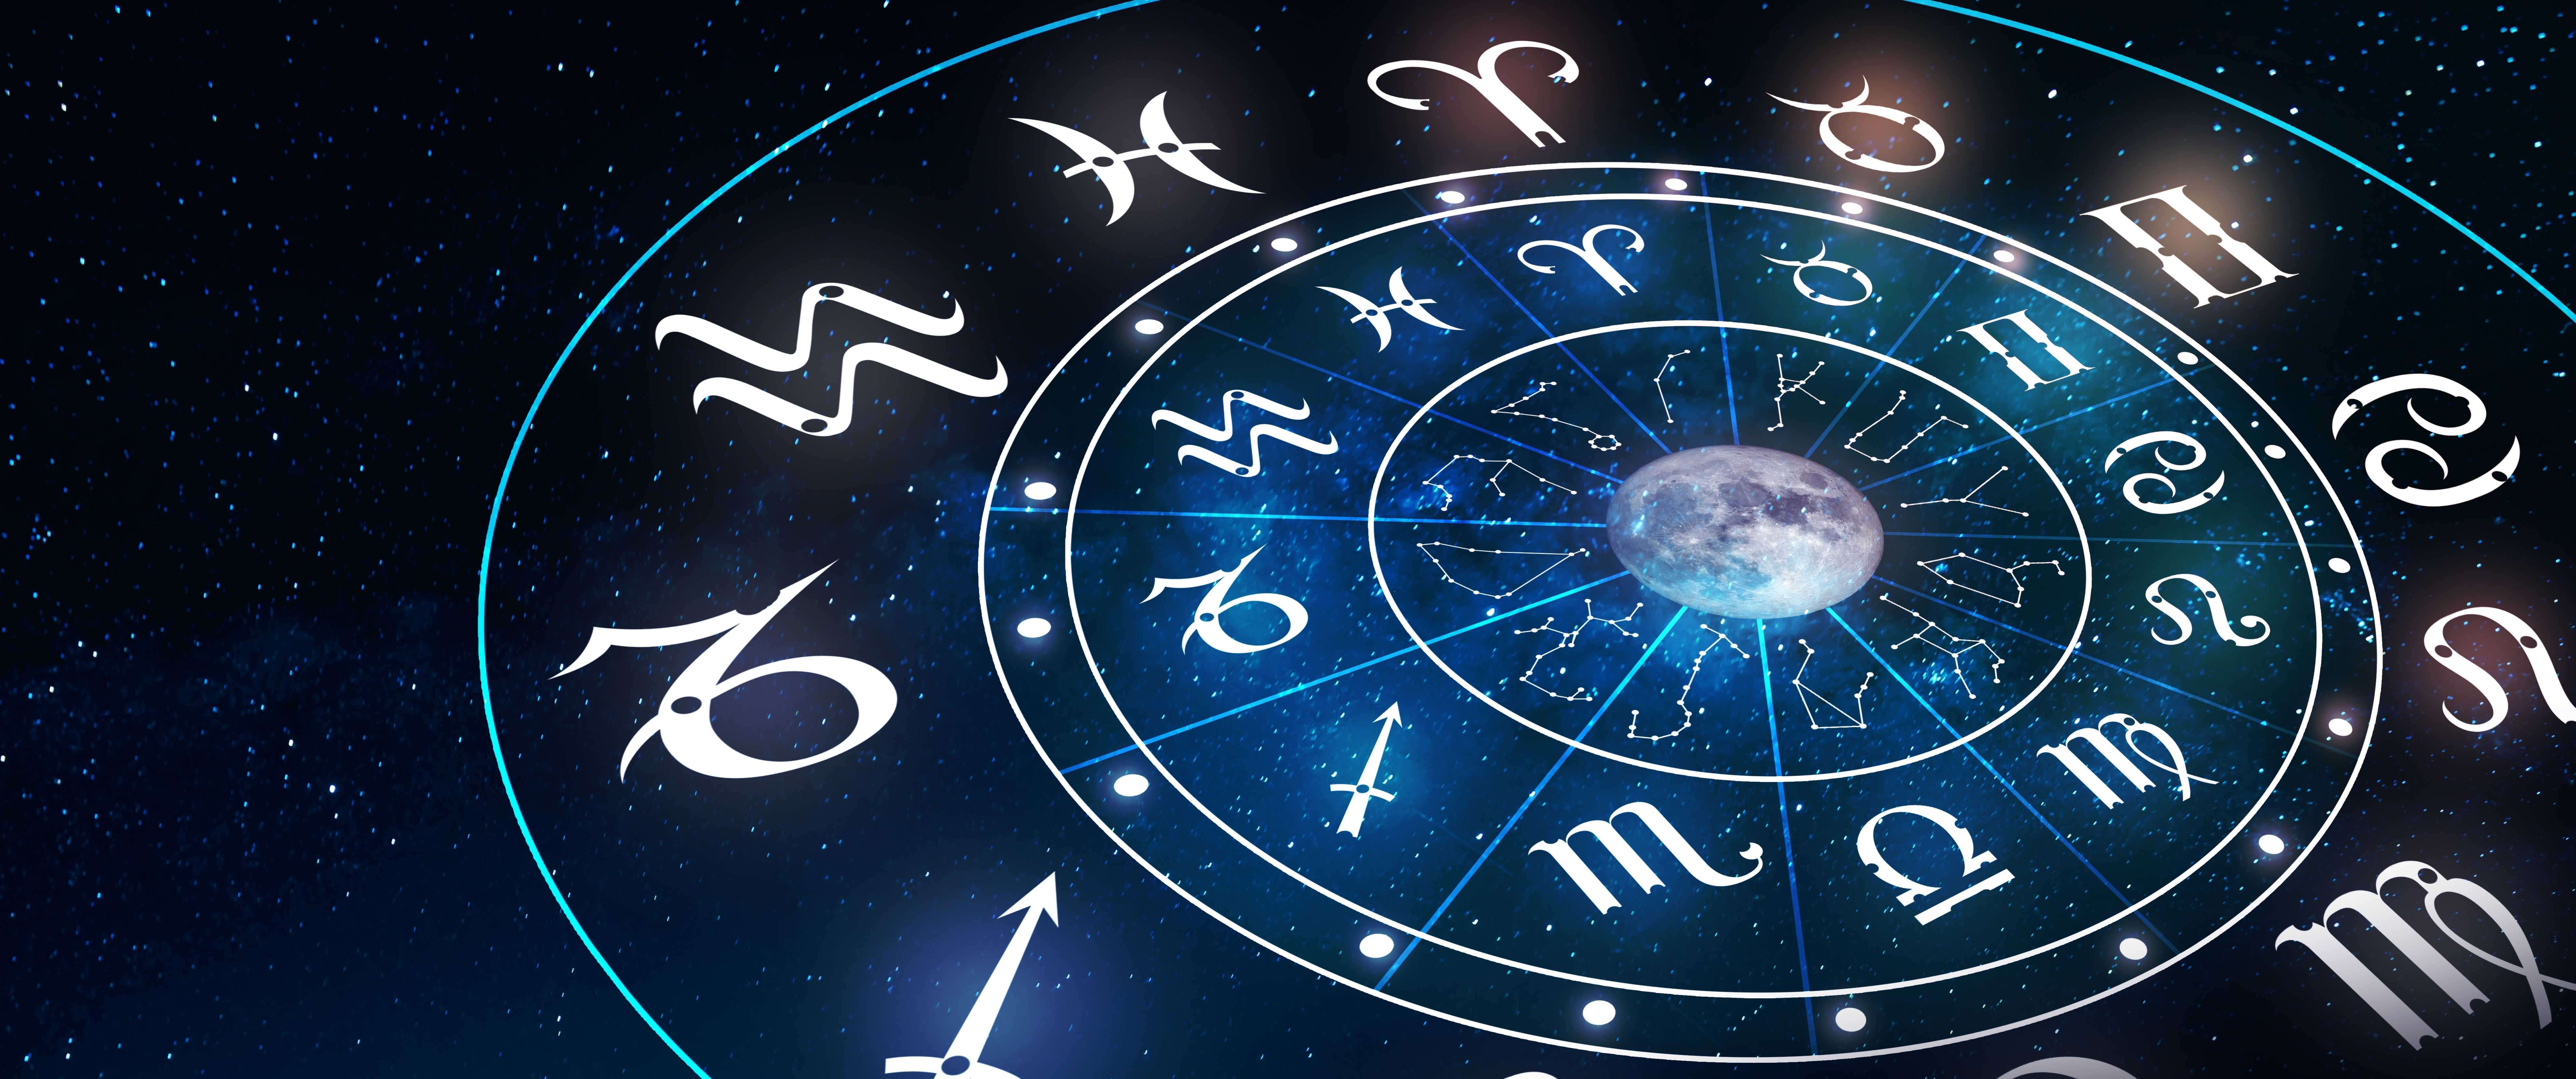 Zodiac Signs | Source: Shutterstock